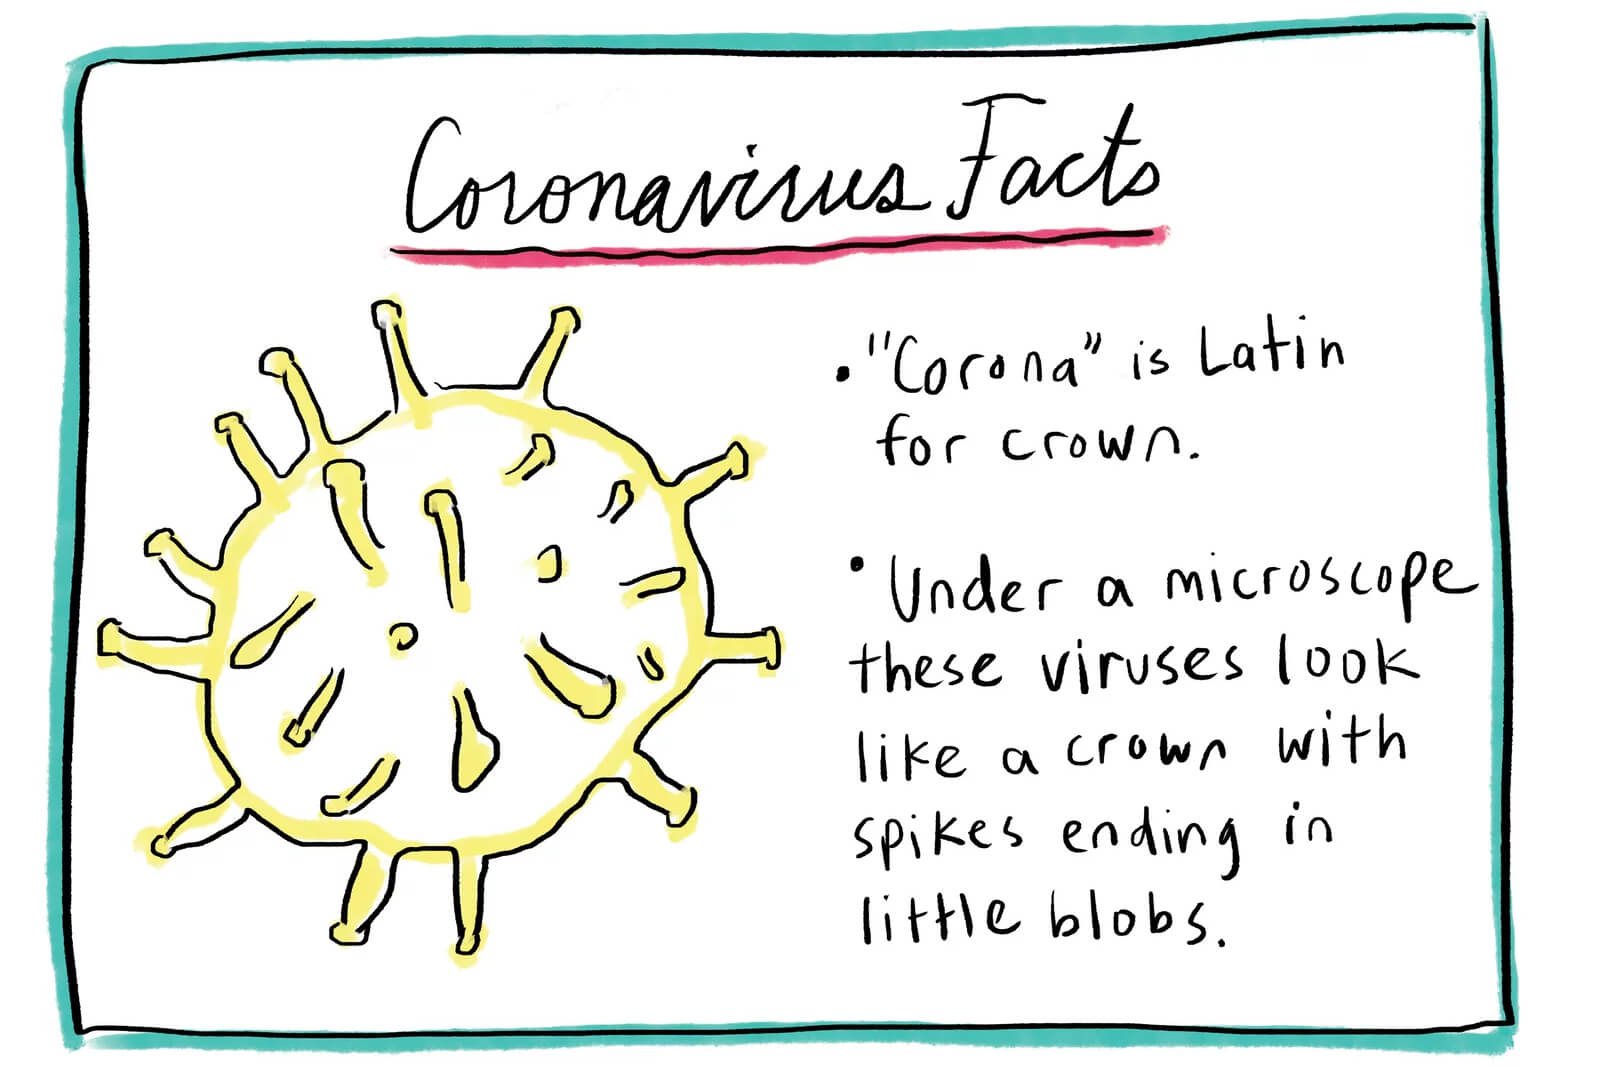 Just For Kids: A Comic Exploring The New Coronavirus (NPR)